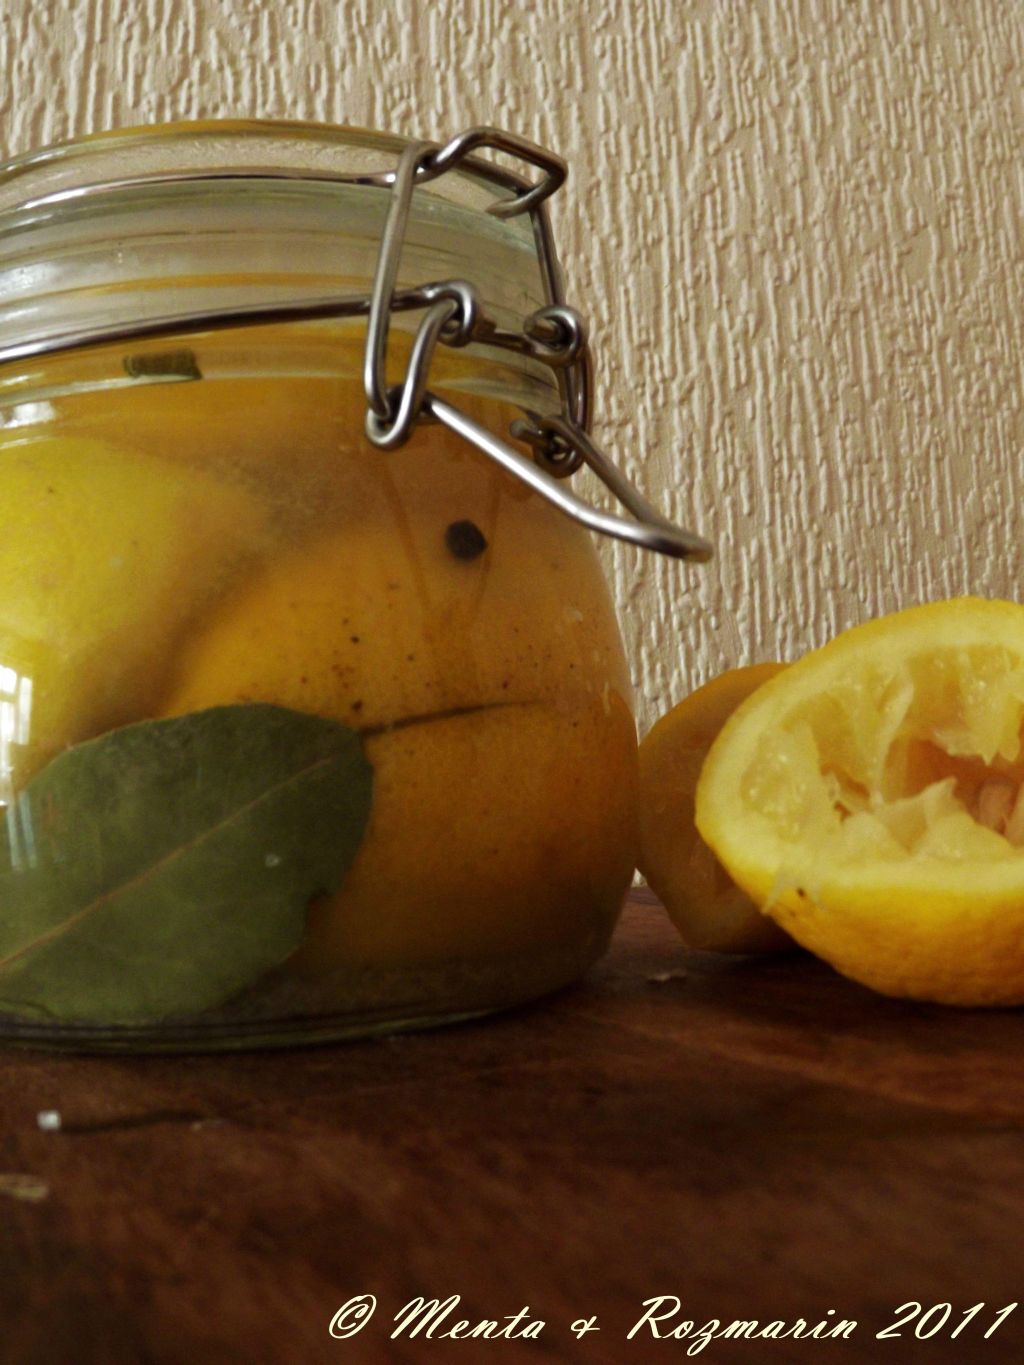 Lamai conservate (preserved lemons)